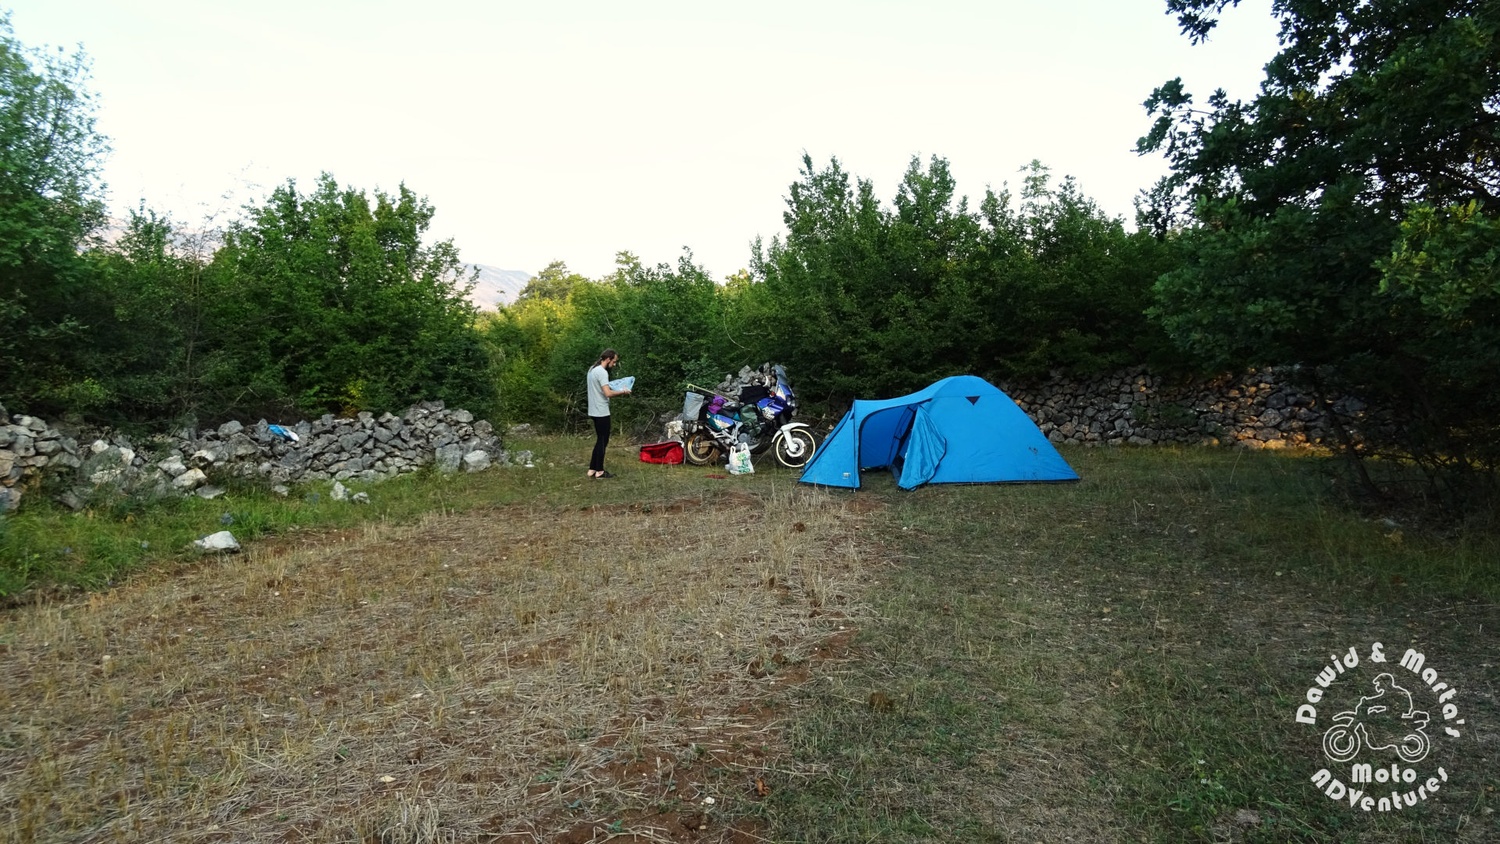 Camping at Peruca Lake